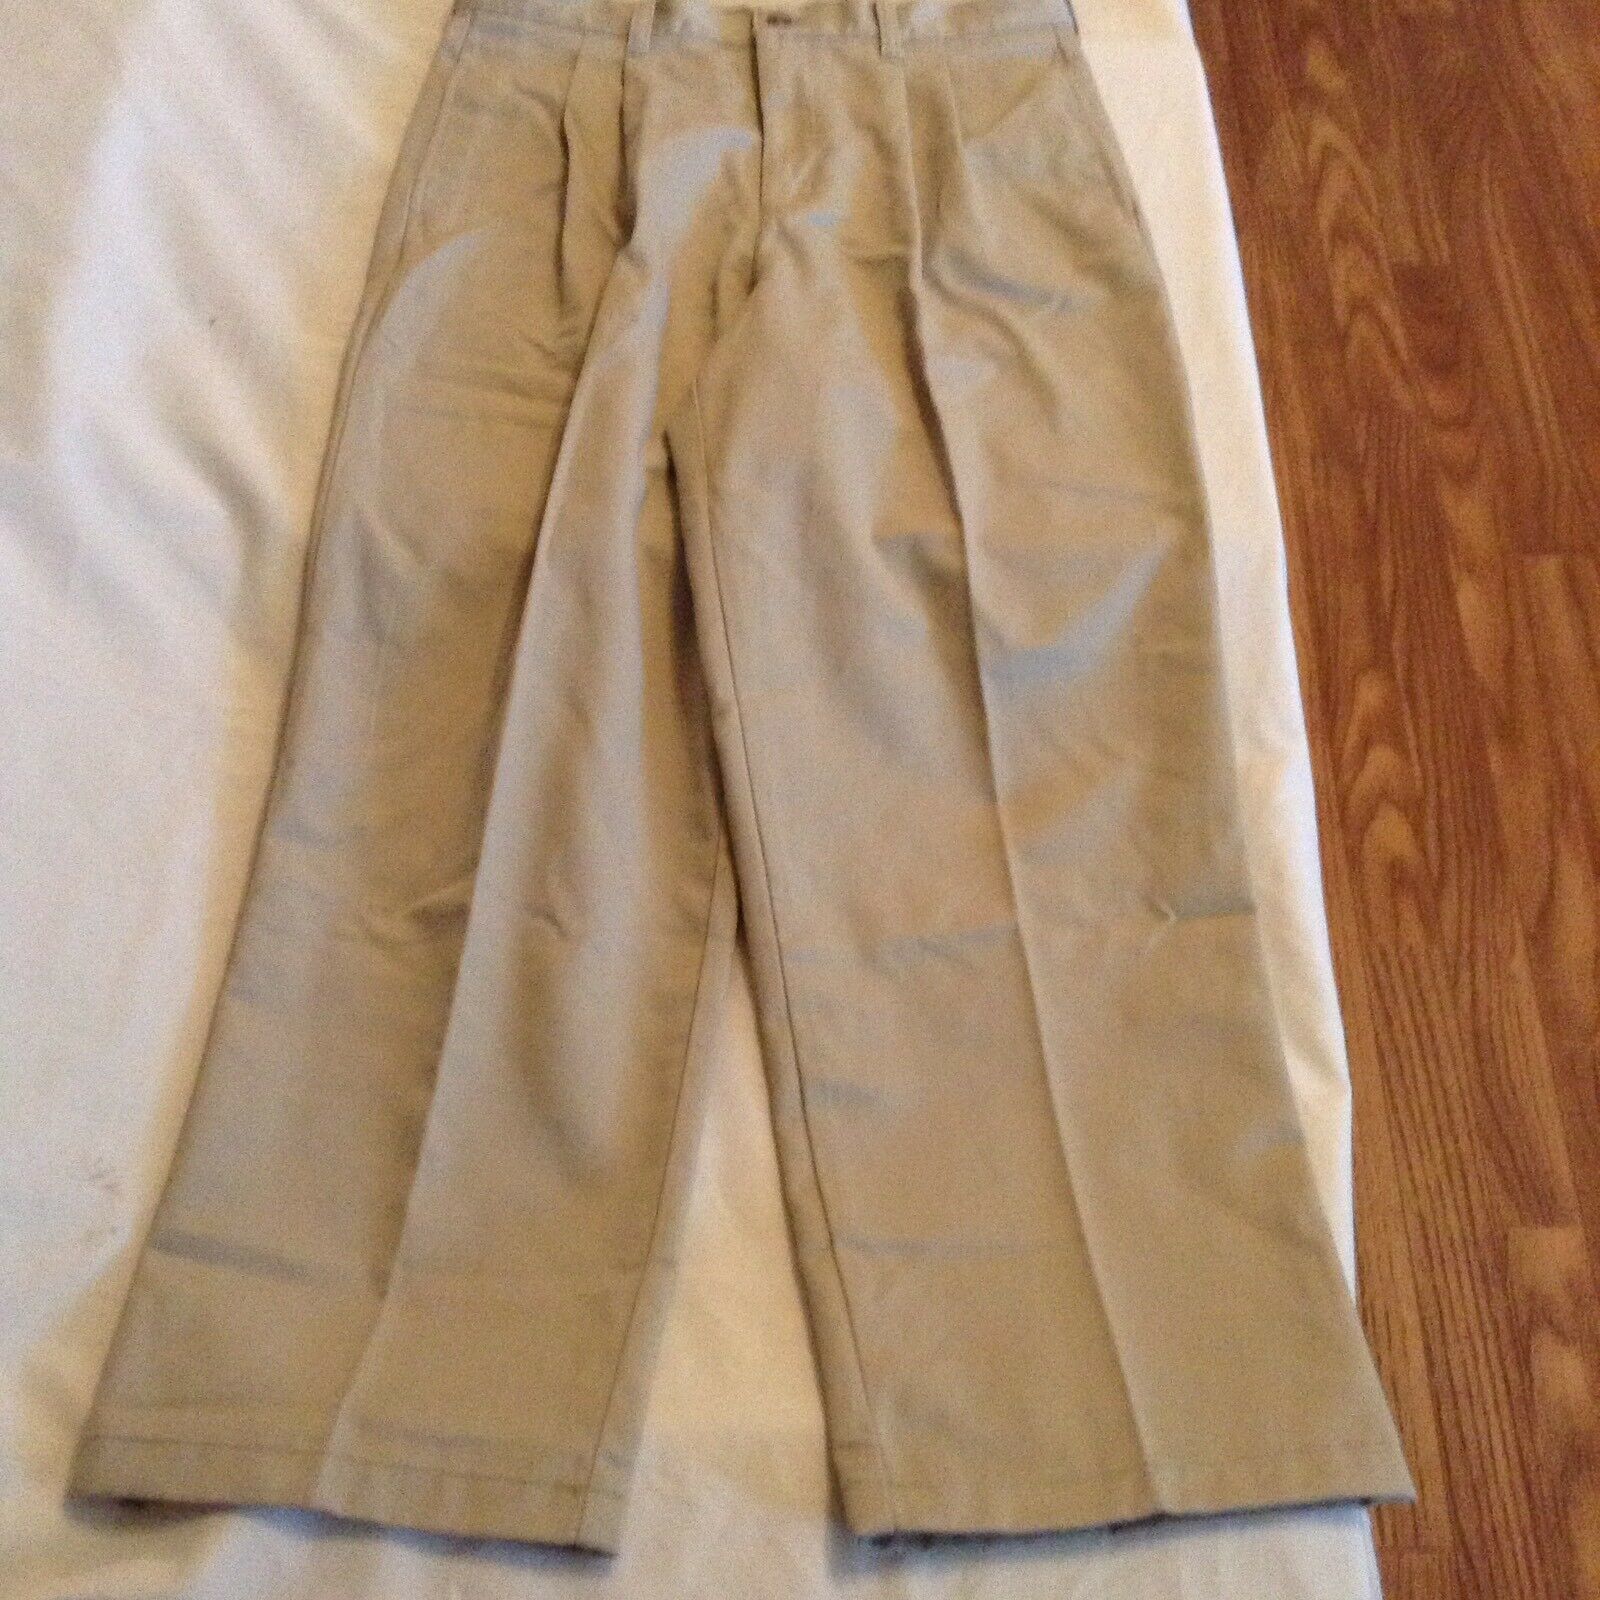 Size 14 Husky George pants uniform khaki pleated front boys New - $7.99